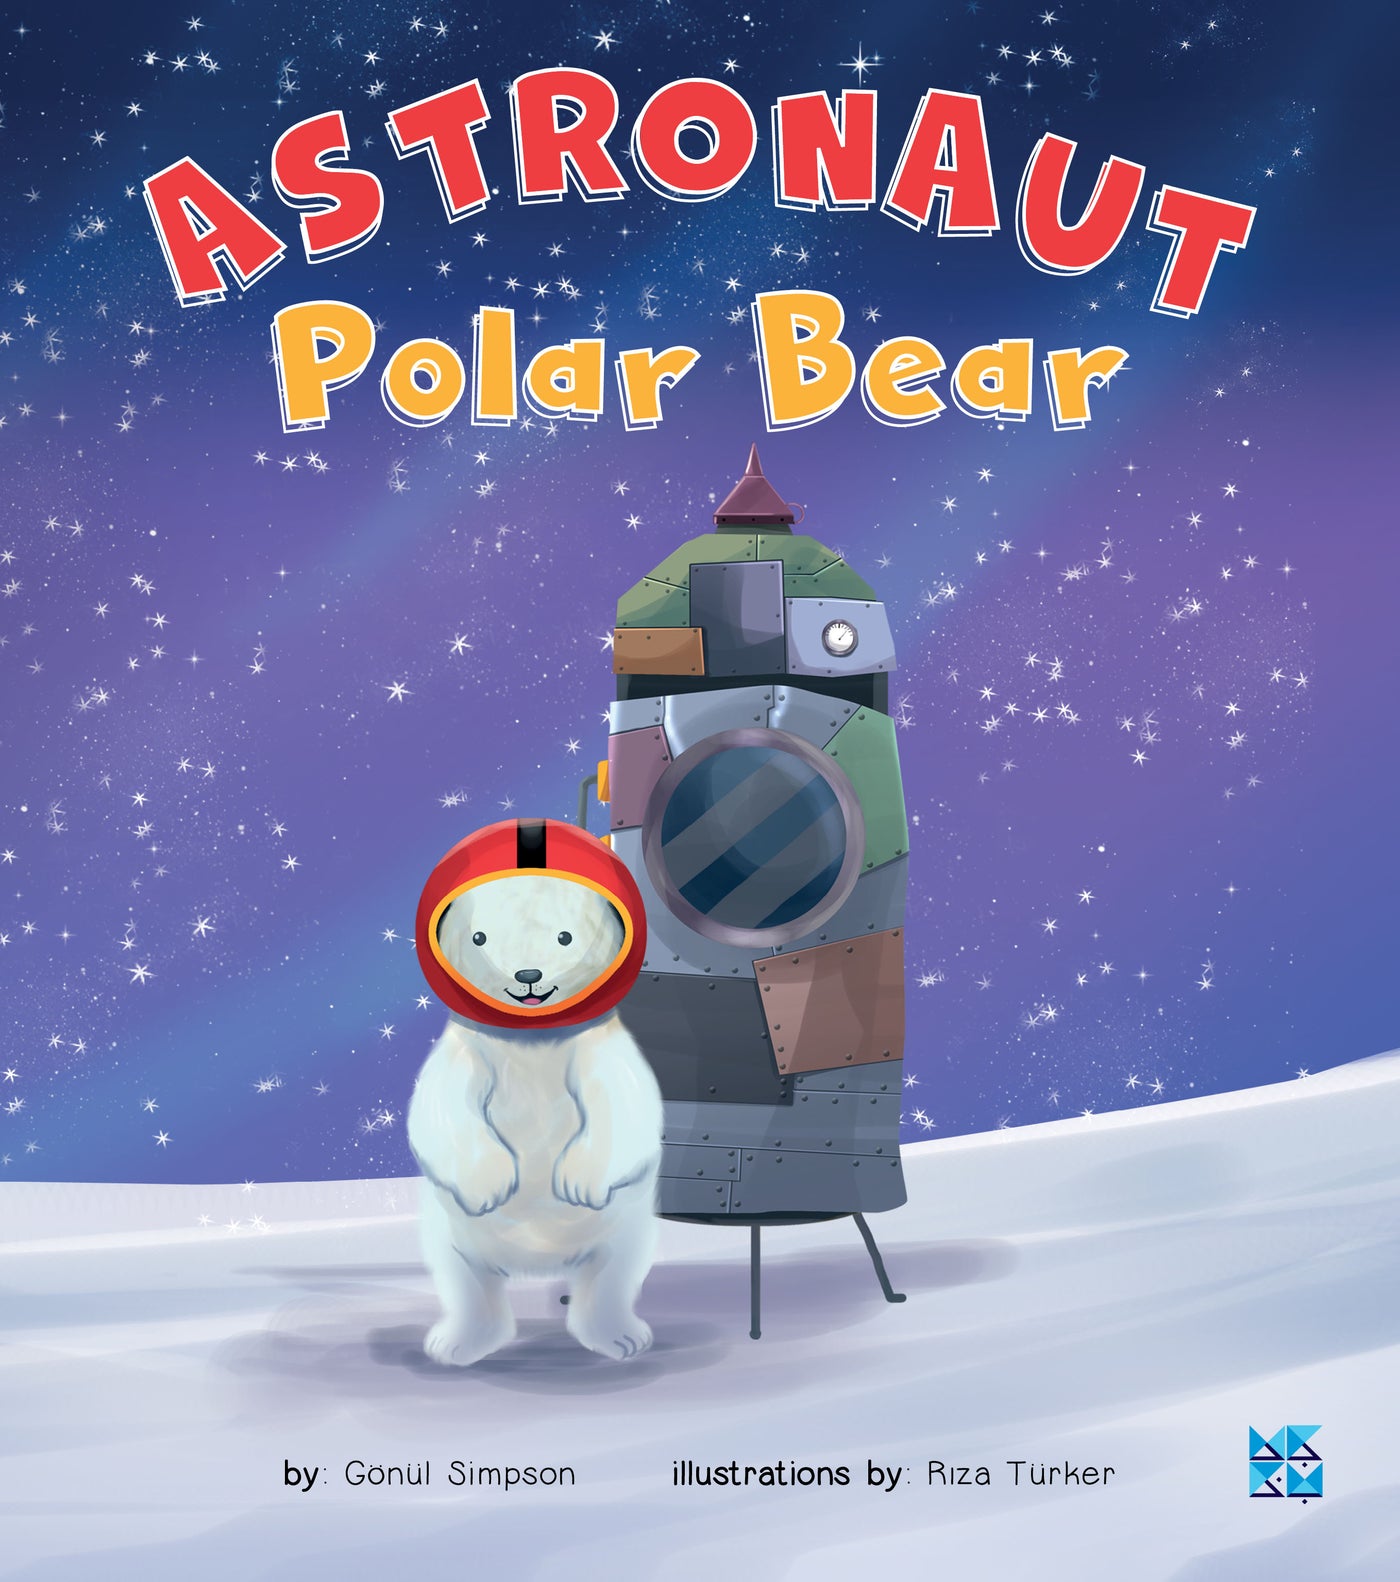 Astronaut Polar Bear - Book Series Cover